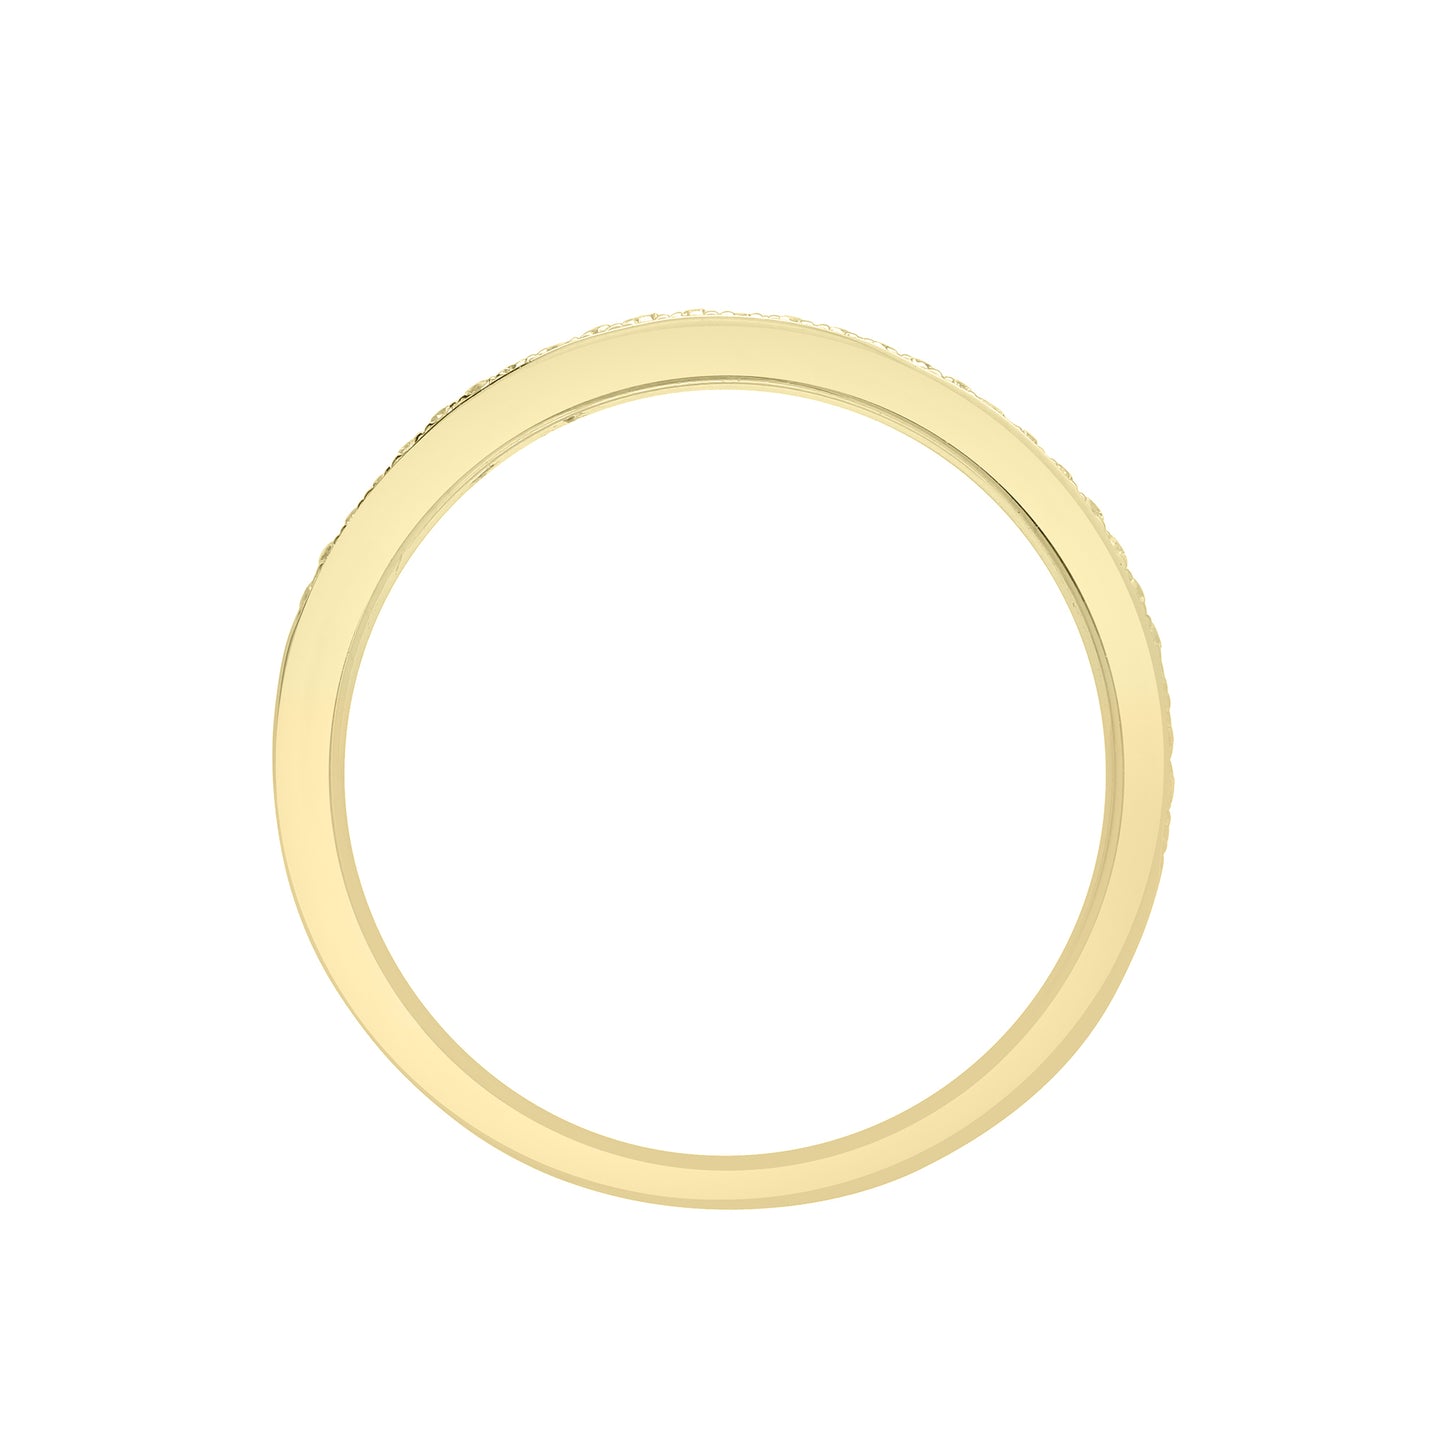 18ct Gold  0.1ct Diamond Dainty Band Eternity Ring 2mm - 18R889-010